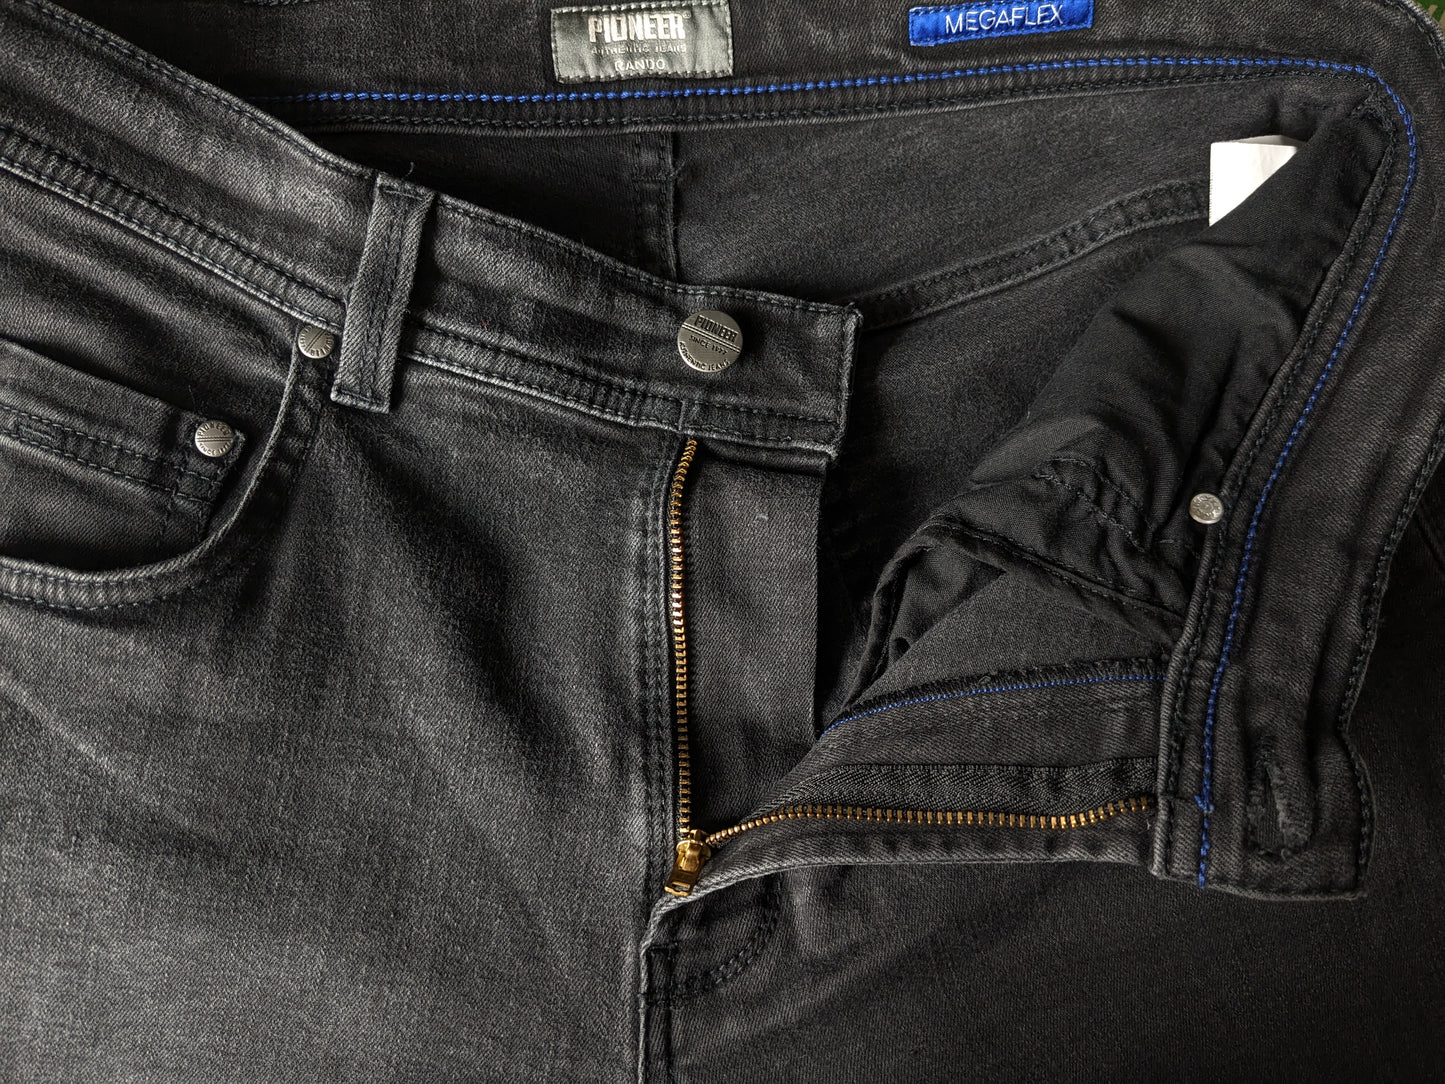 Pioneer jeans. Black colored. Type Rando. Megaflex. Size W33 - L30. (shortened)